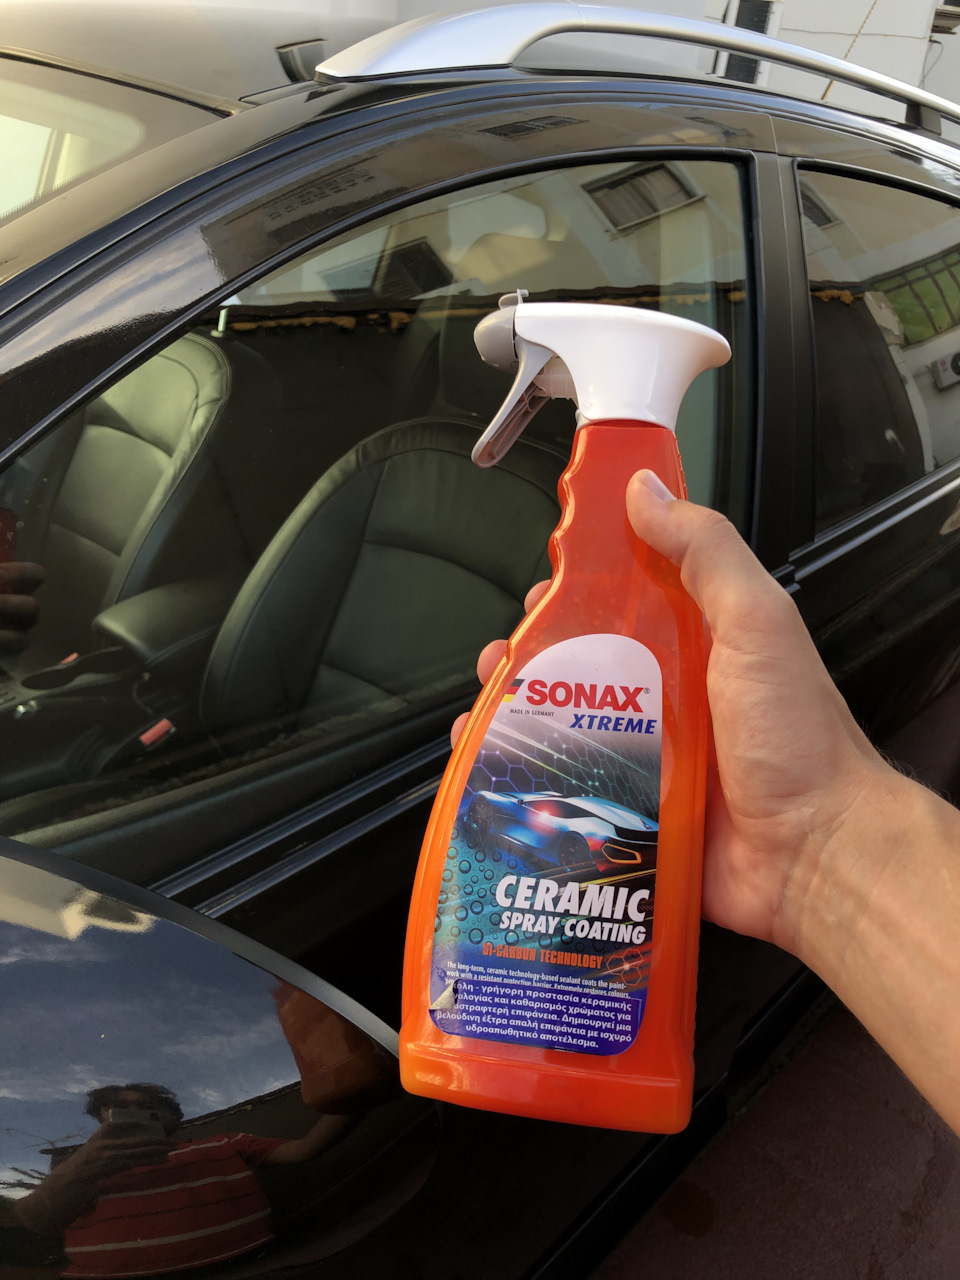 Sonax ceramic spray coating review